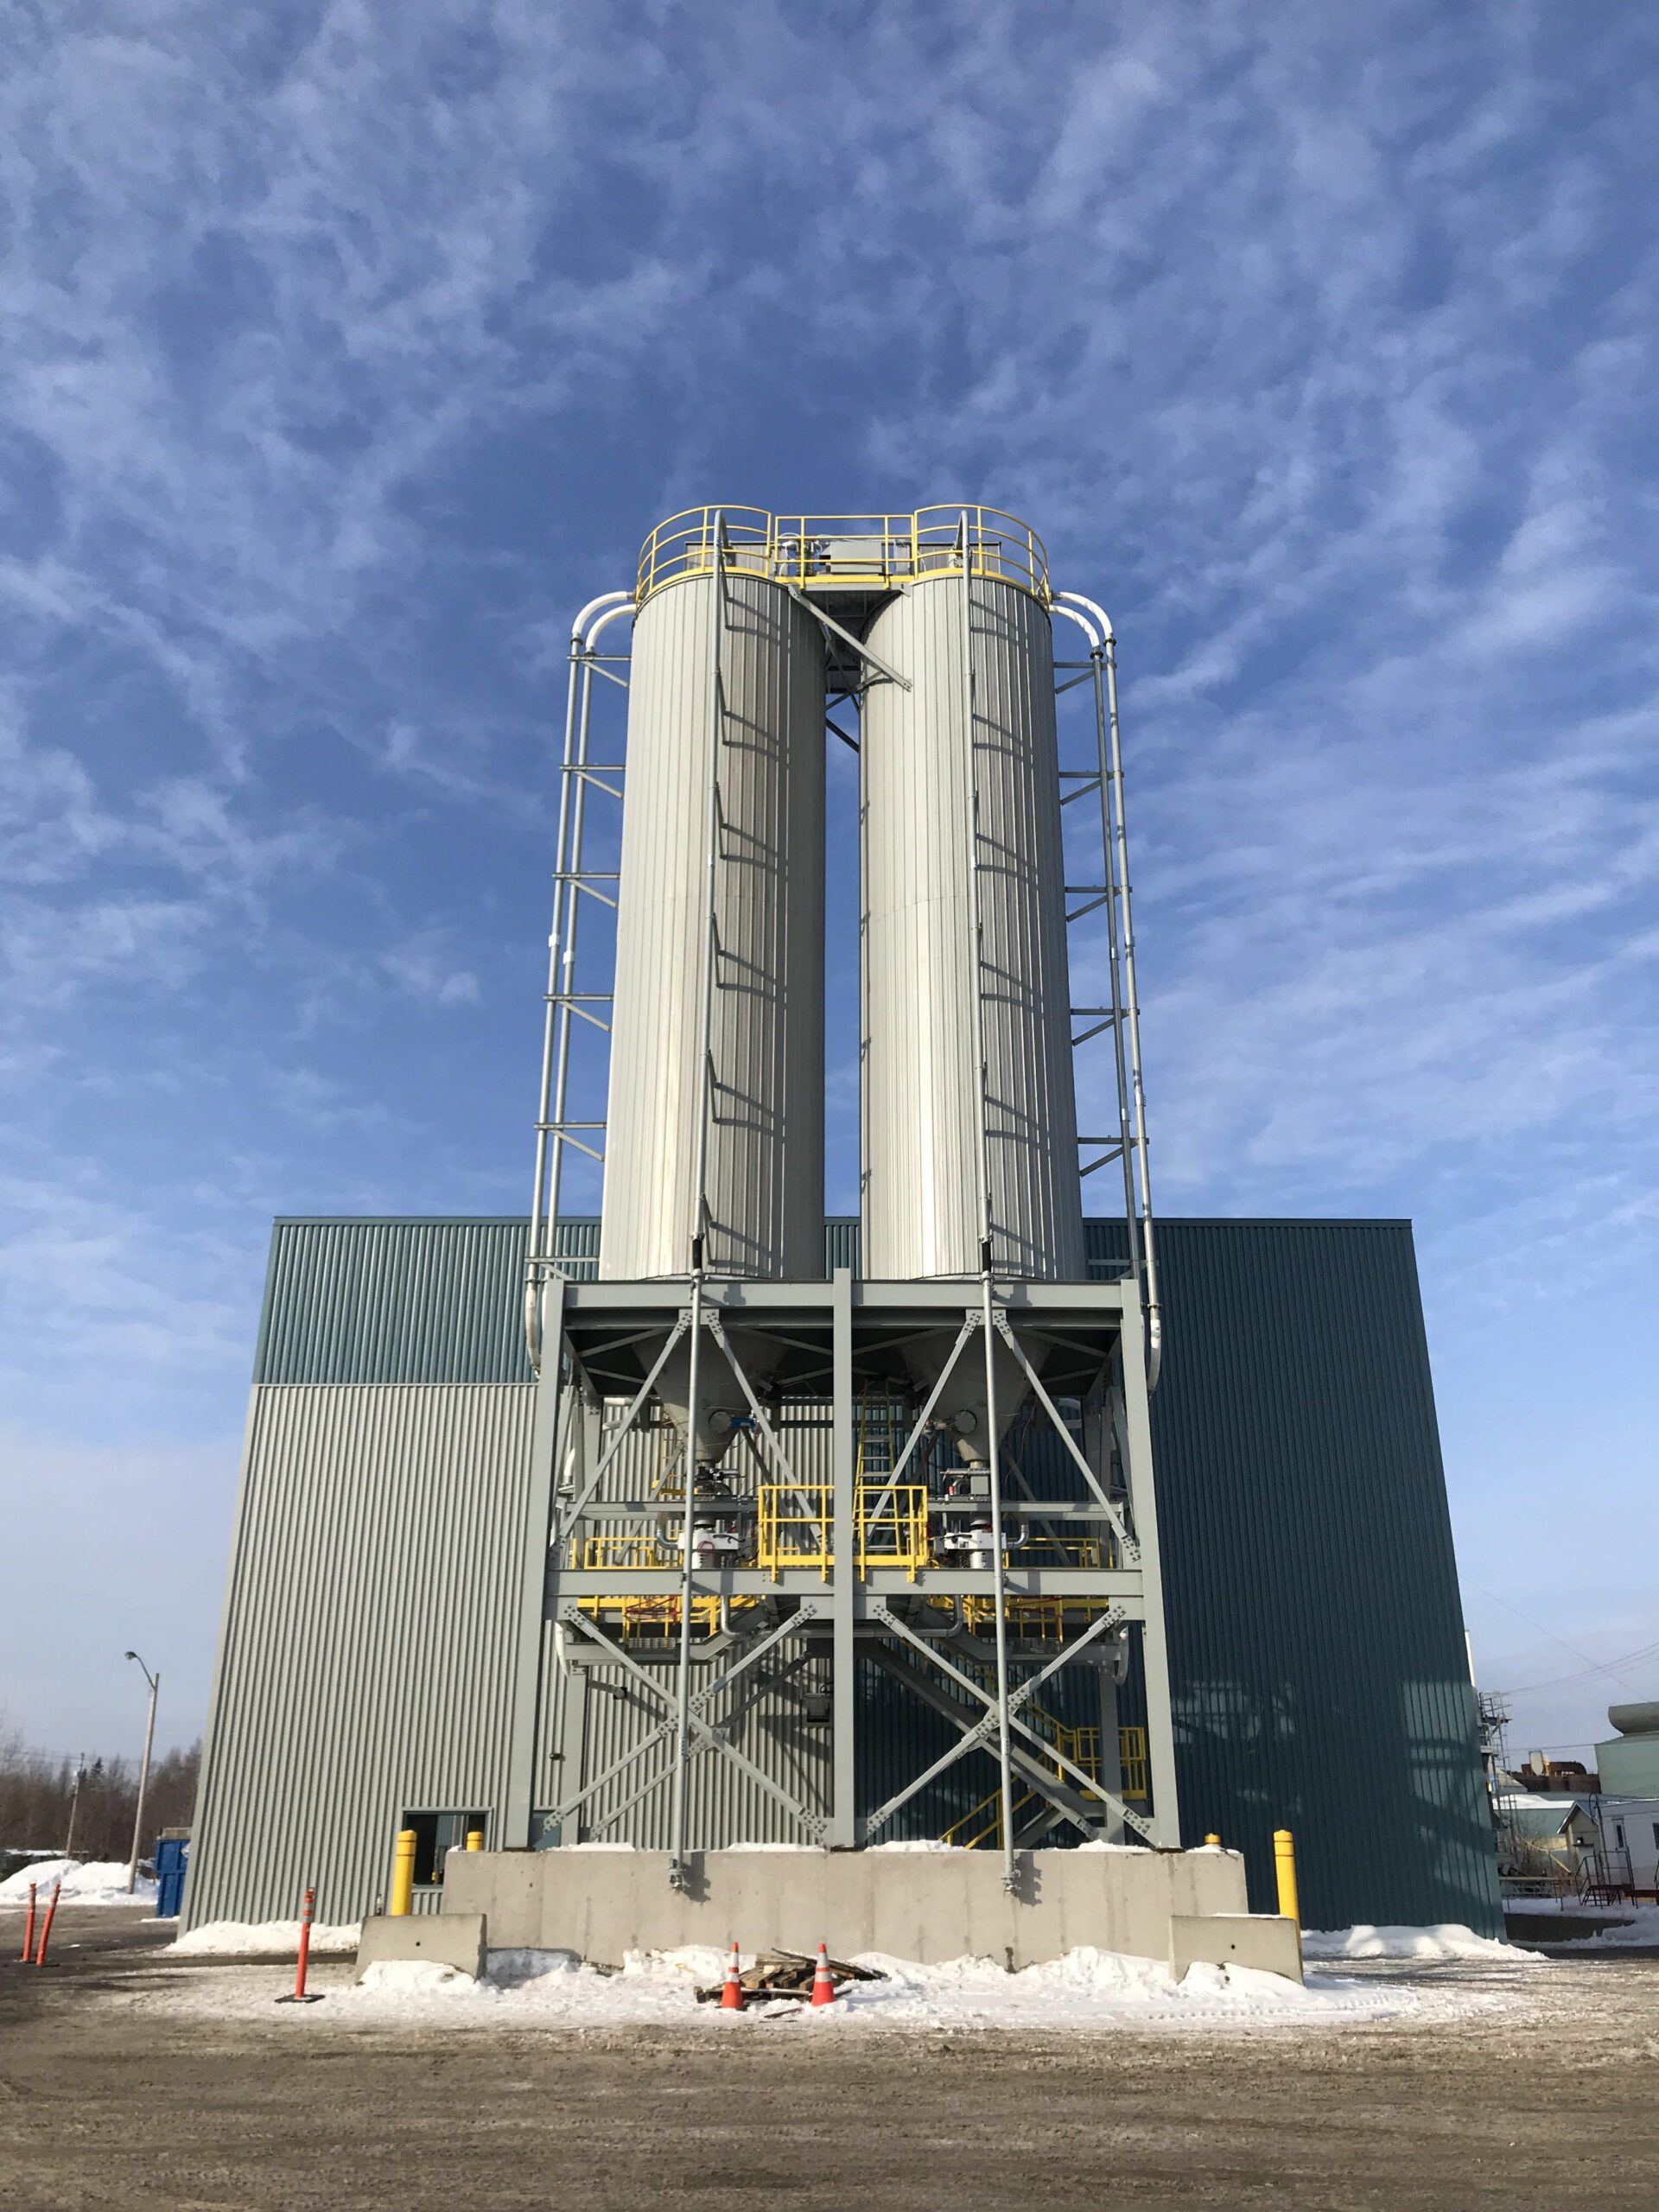 010a_insulated silos and aluminium powder handling systems_con-v-air